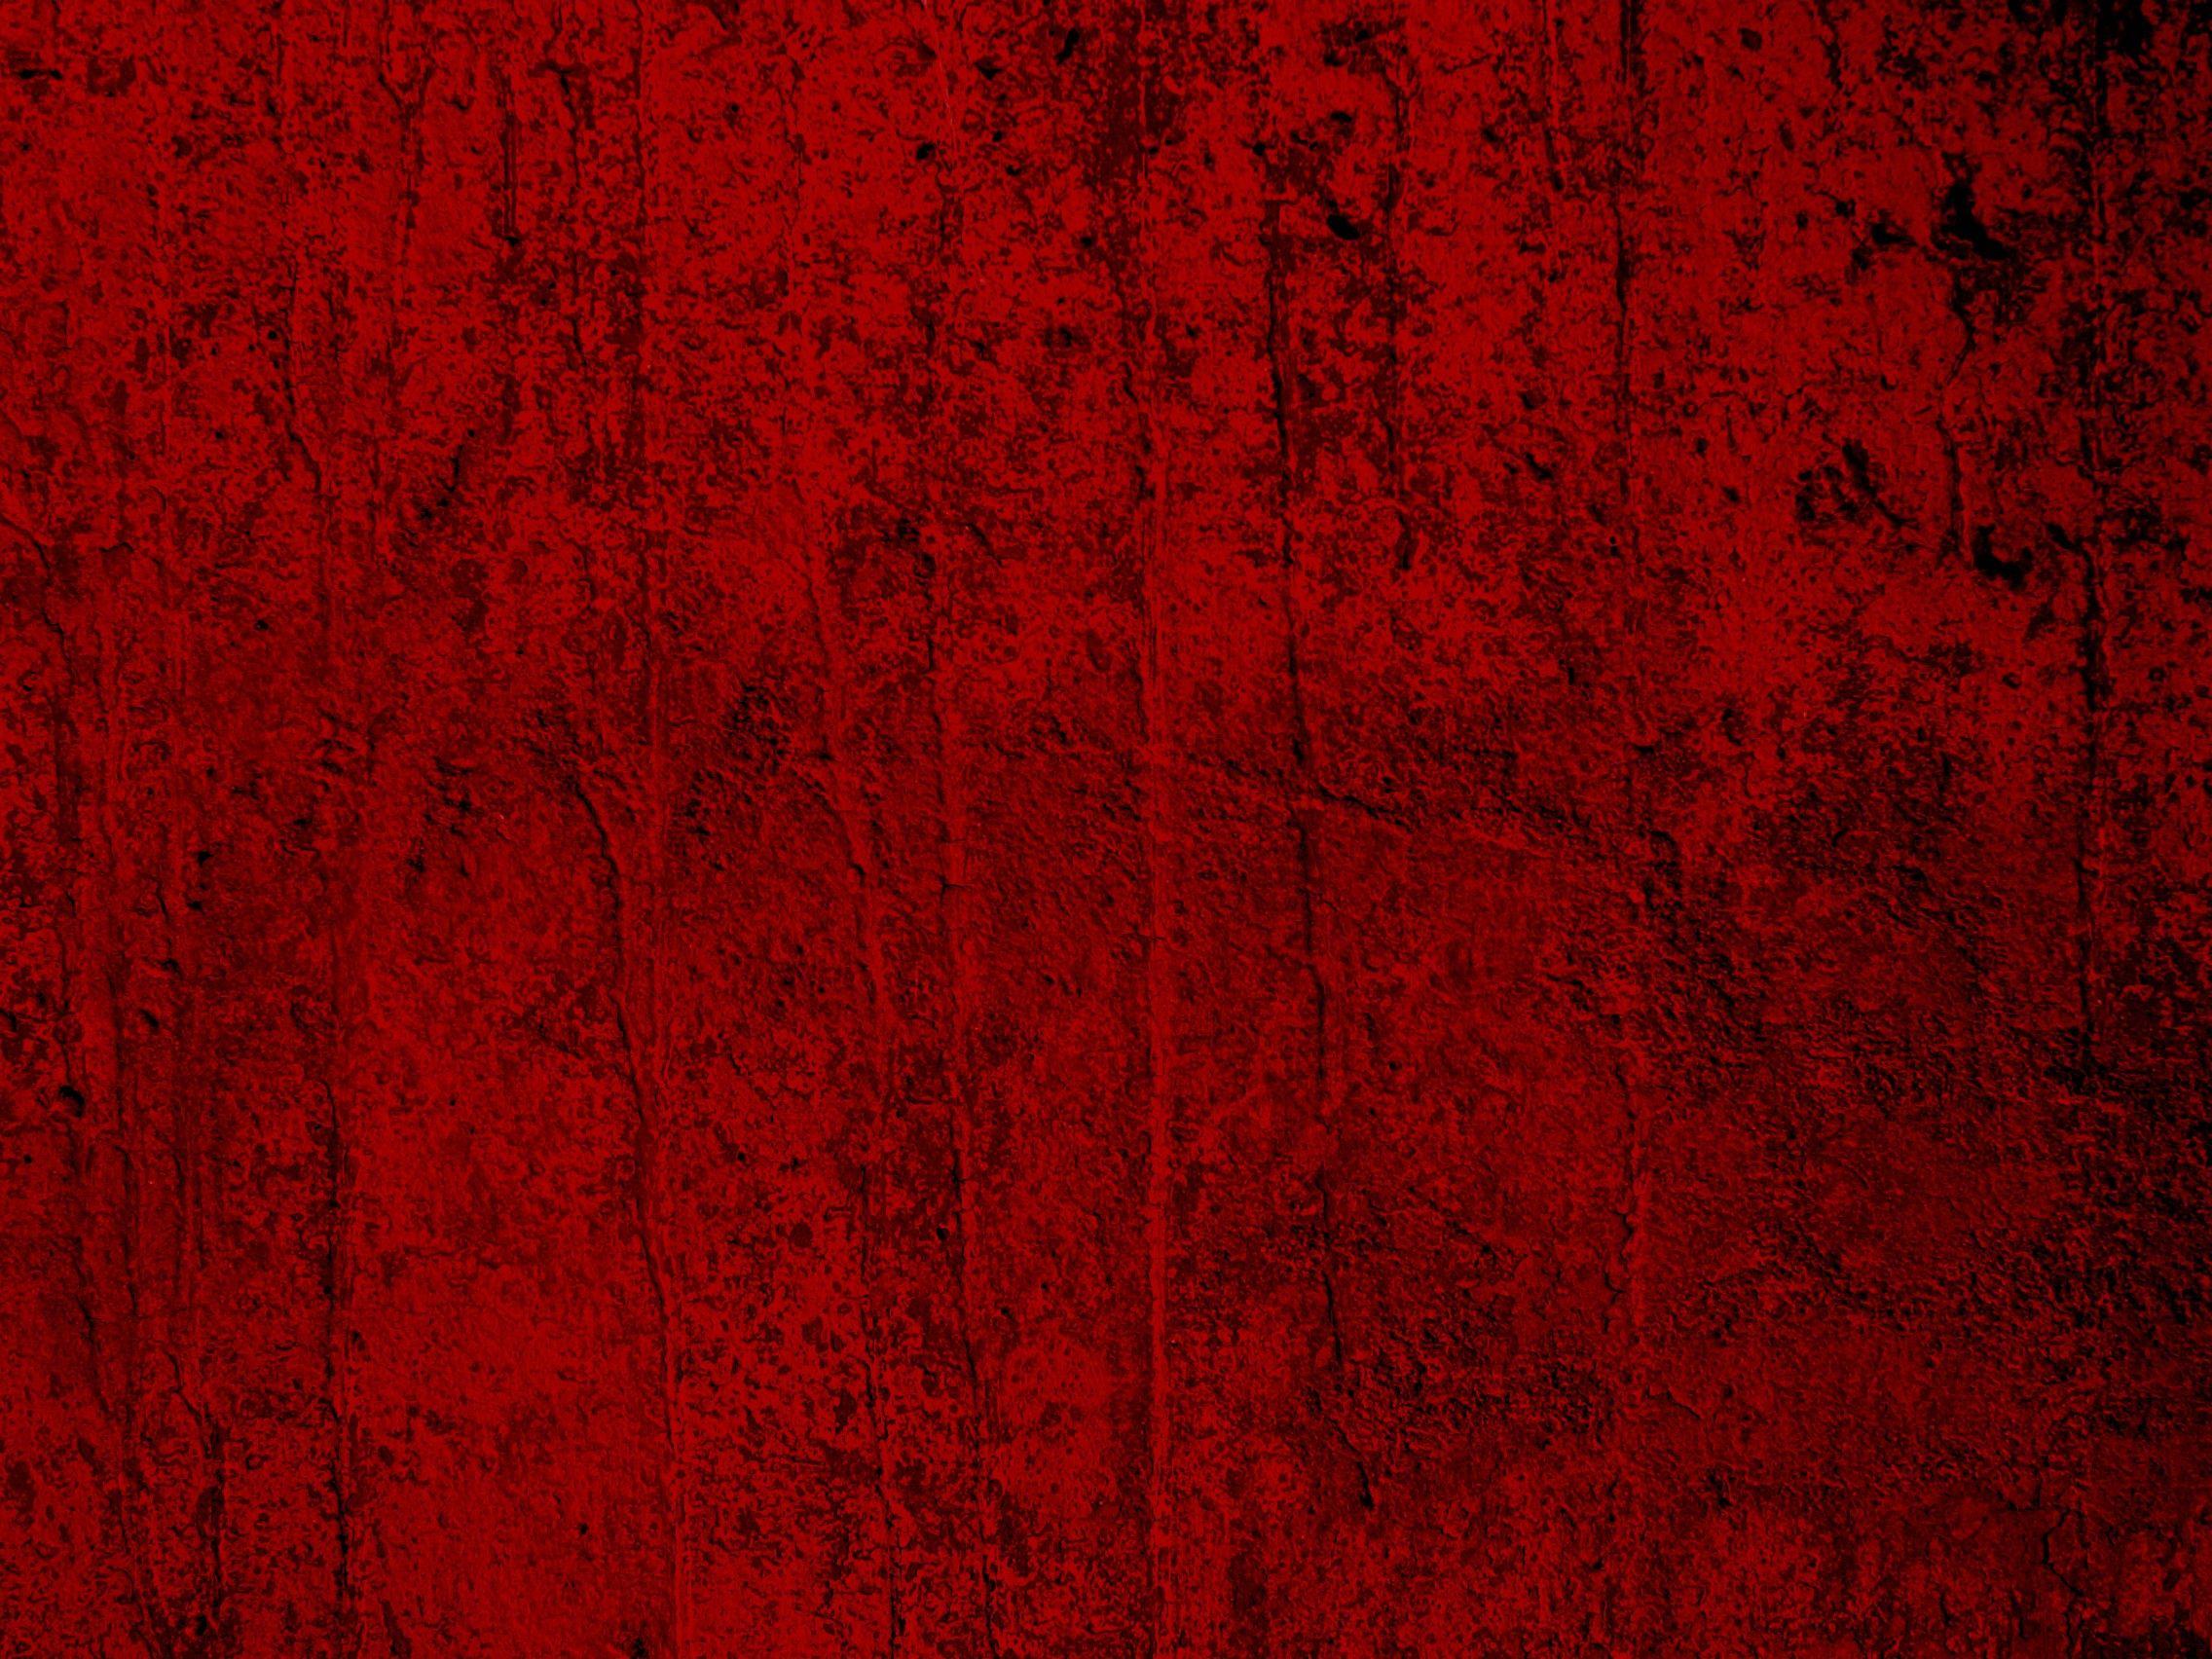 Red Grunge backgroundDownload free amazing wallpaper